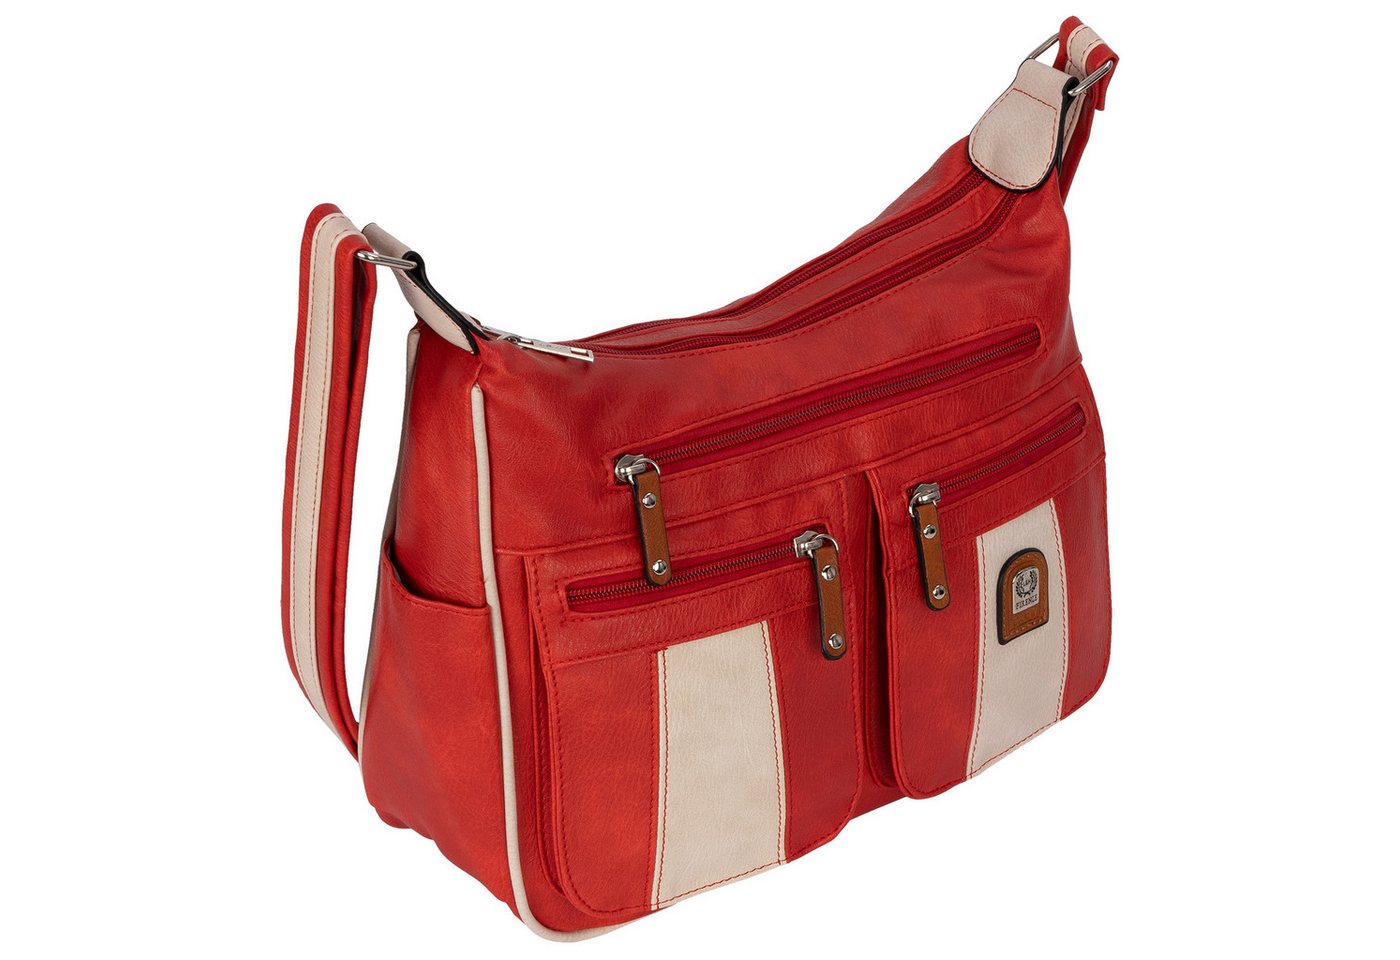 EAAKIE Umhängetasche Damen Tasche Schultertasche Umhängetasche Crossover Bag Leder Optik, als Schultertasche, Umhängetasche tragbar von EAAKIE